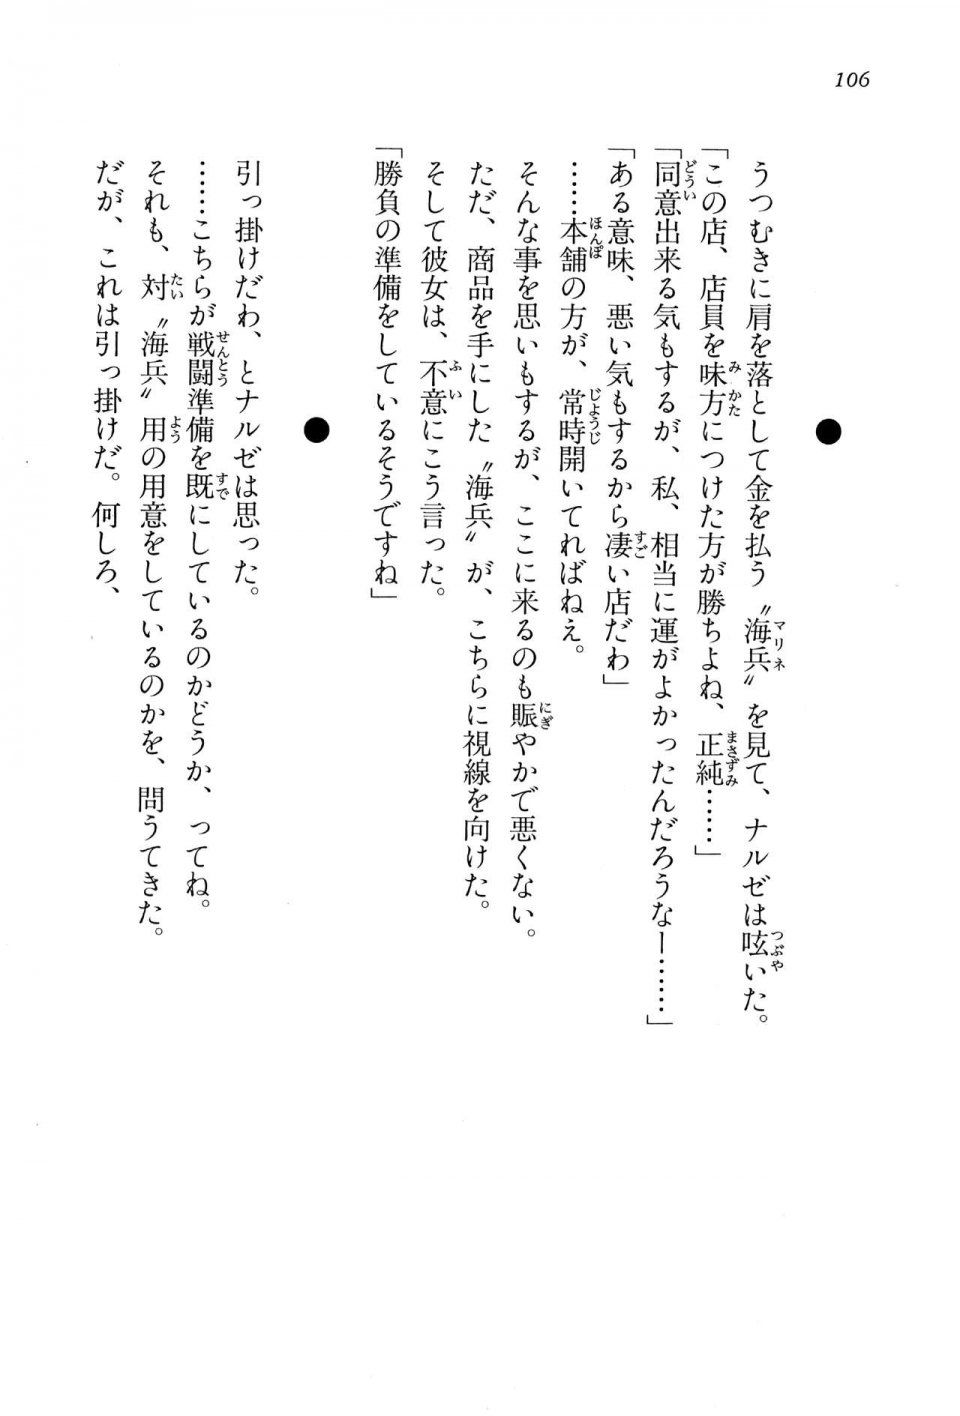 Kyoukai Senjou no Horizon BD Special Mininovel Vol 6(3B) - Photo #110